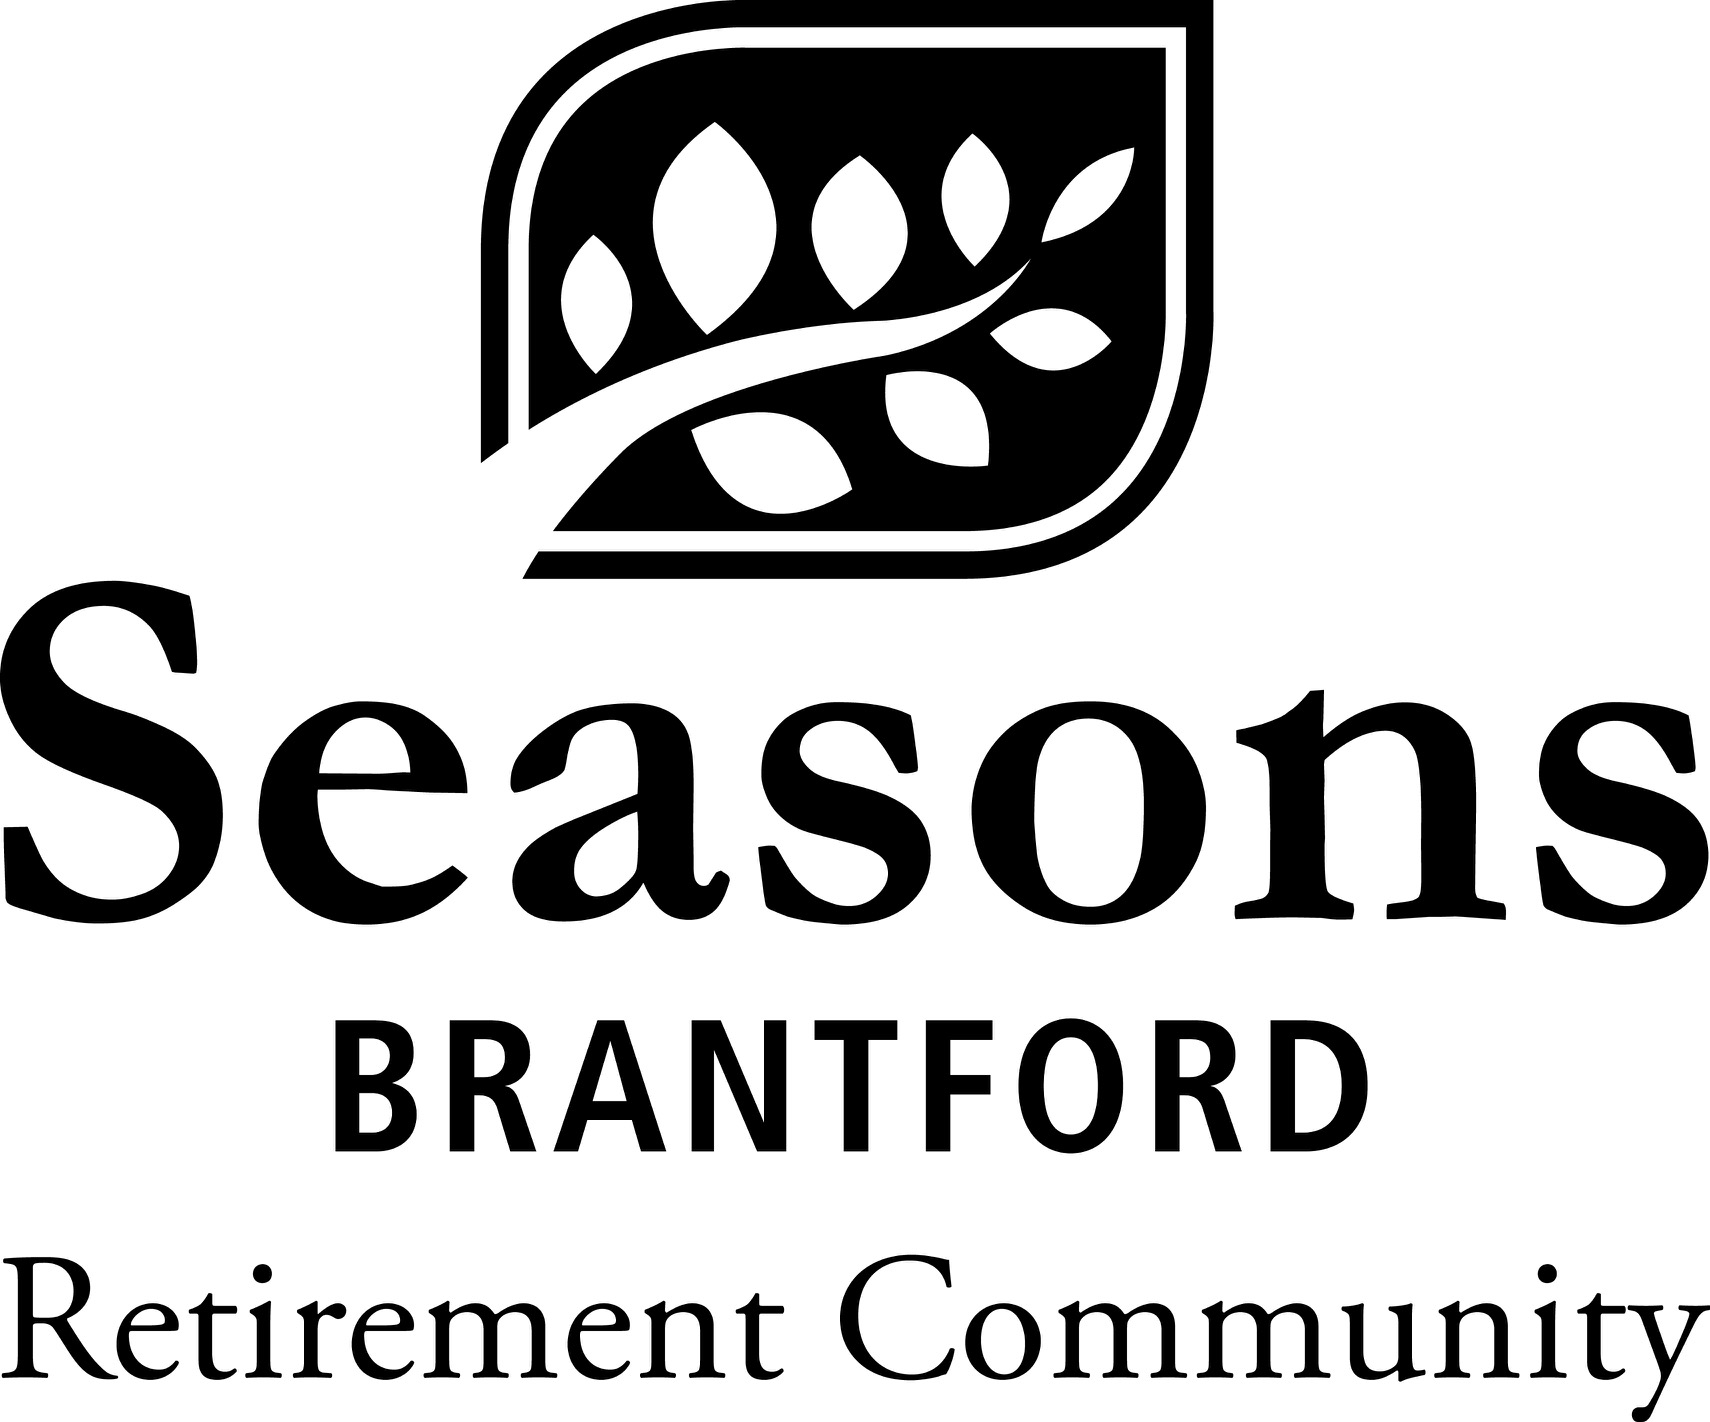 Seasons_Brantford_Black-OUT-RC.jpg